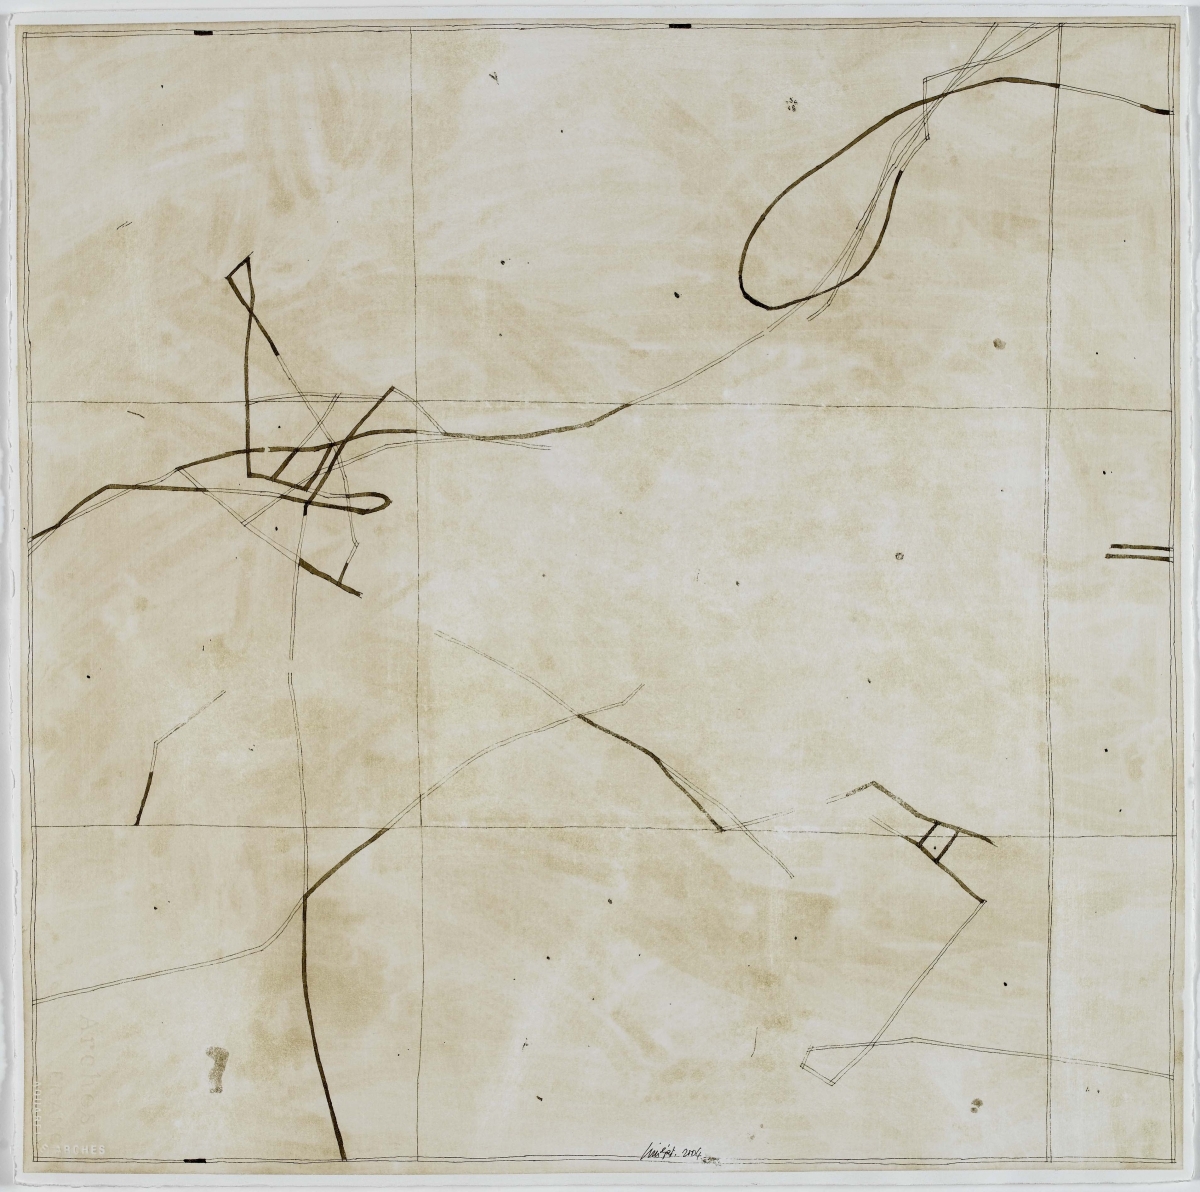 Amorgos, 2004, Ink on paper, 57x57cm